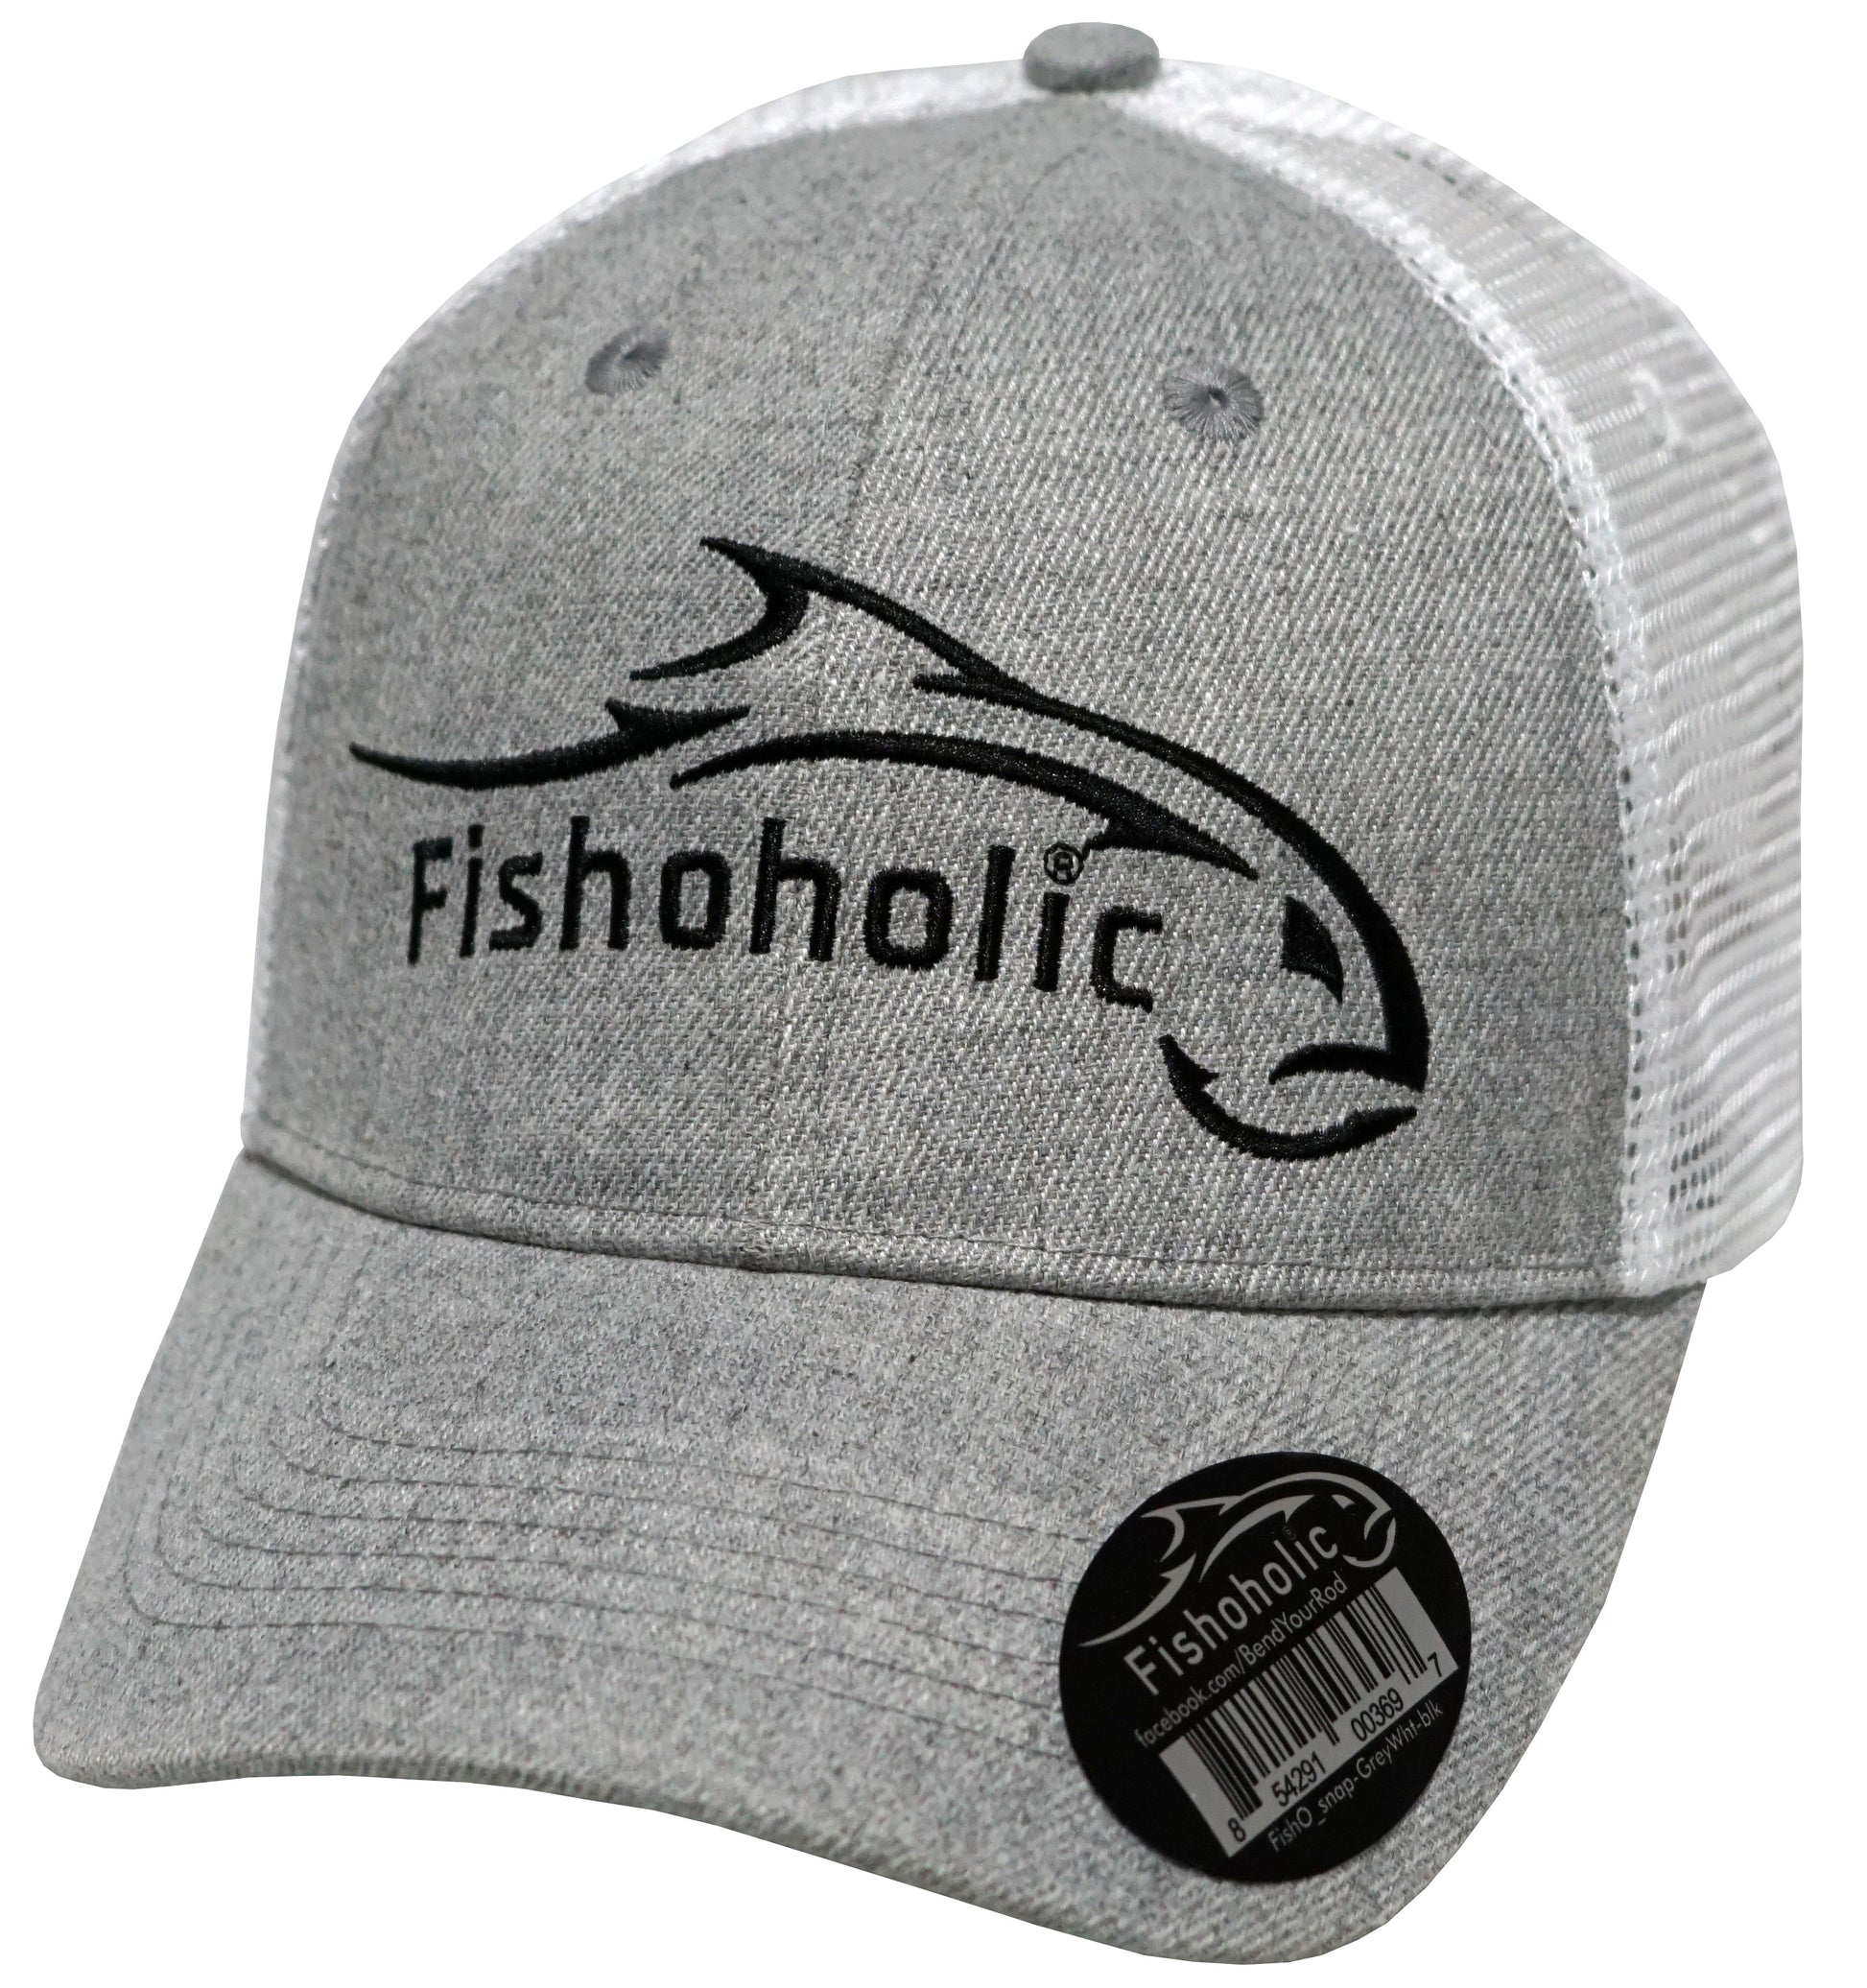 Fishoholic Snap-GRY-WHT Snapback Fishing Hat – Trucker Hat w’ Mesh Back &  Snap Closure (1 size fits most)